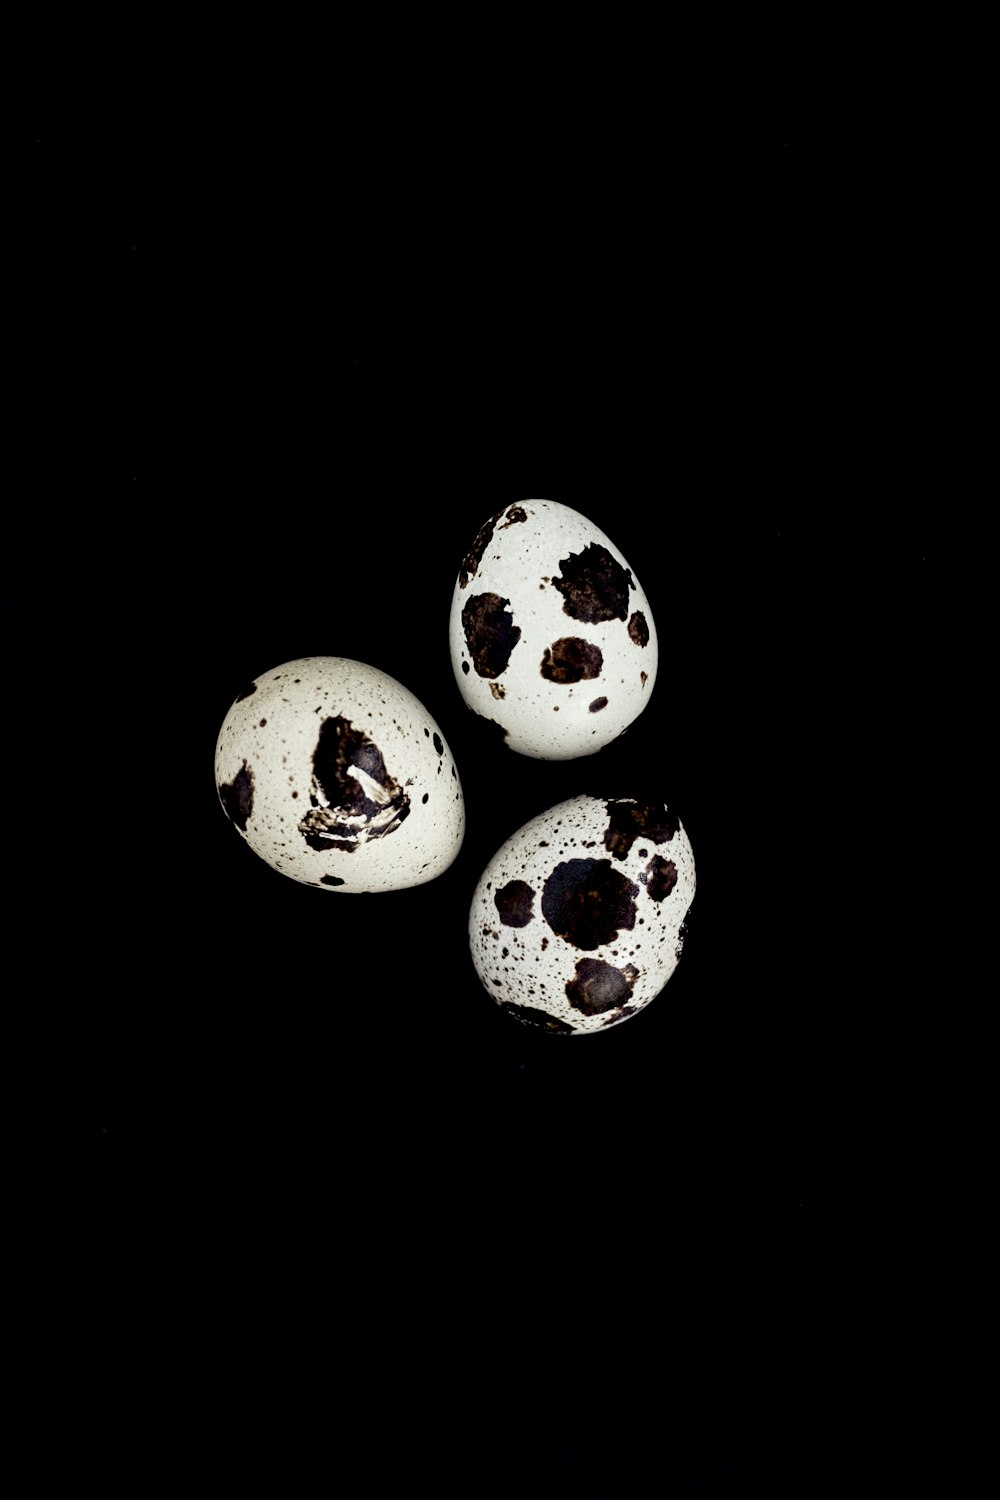 three black and white eggs